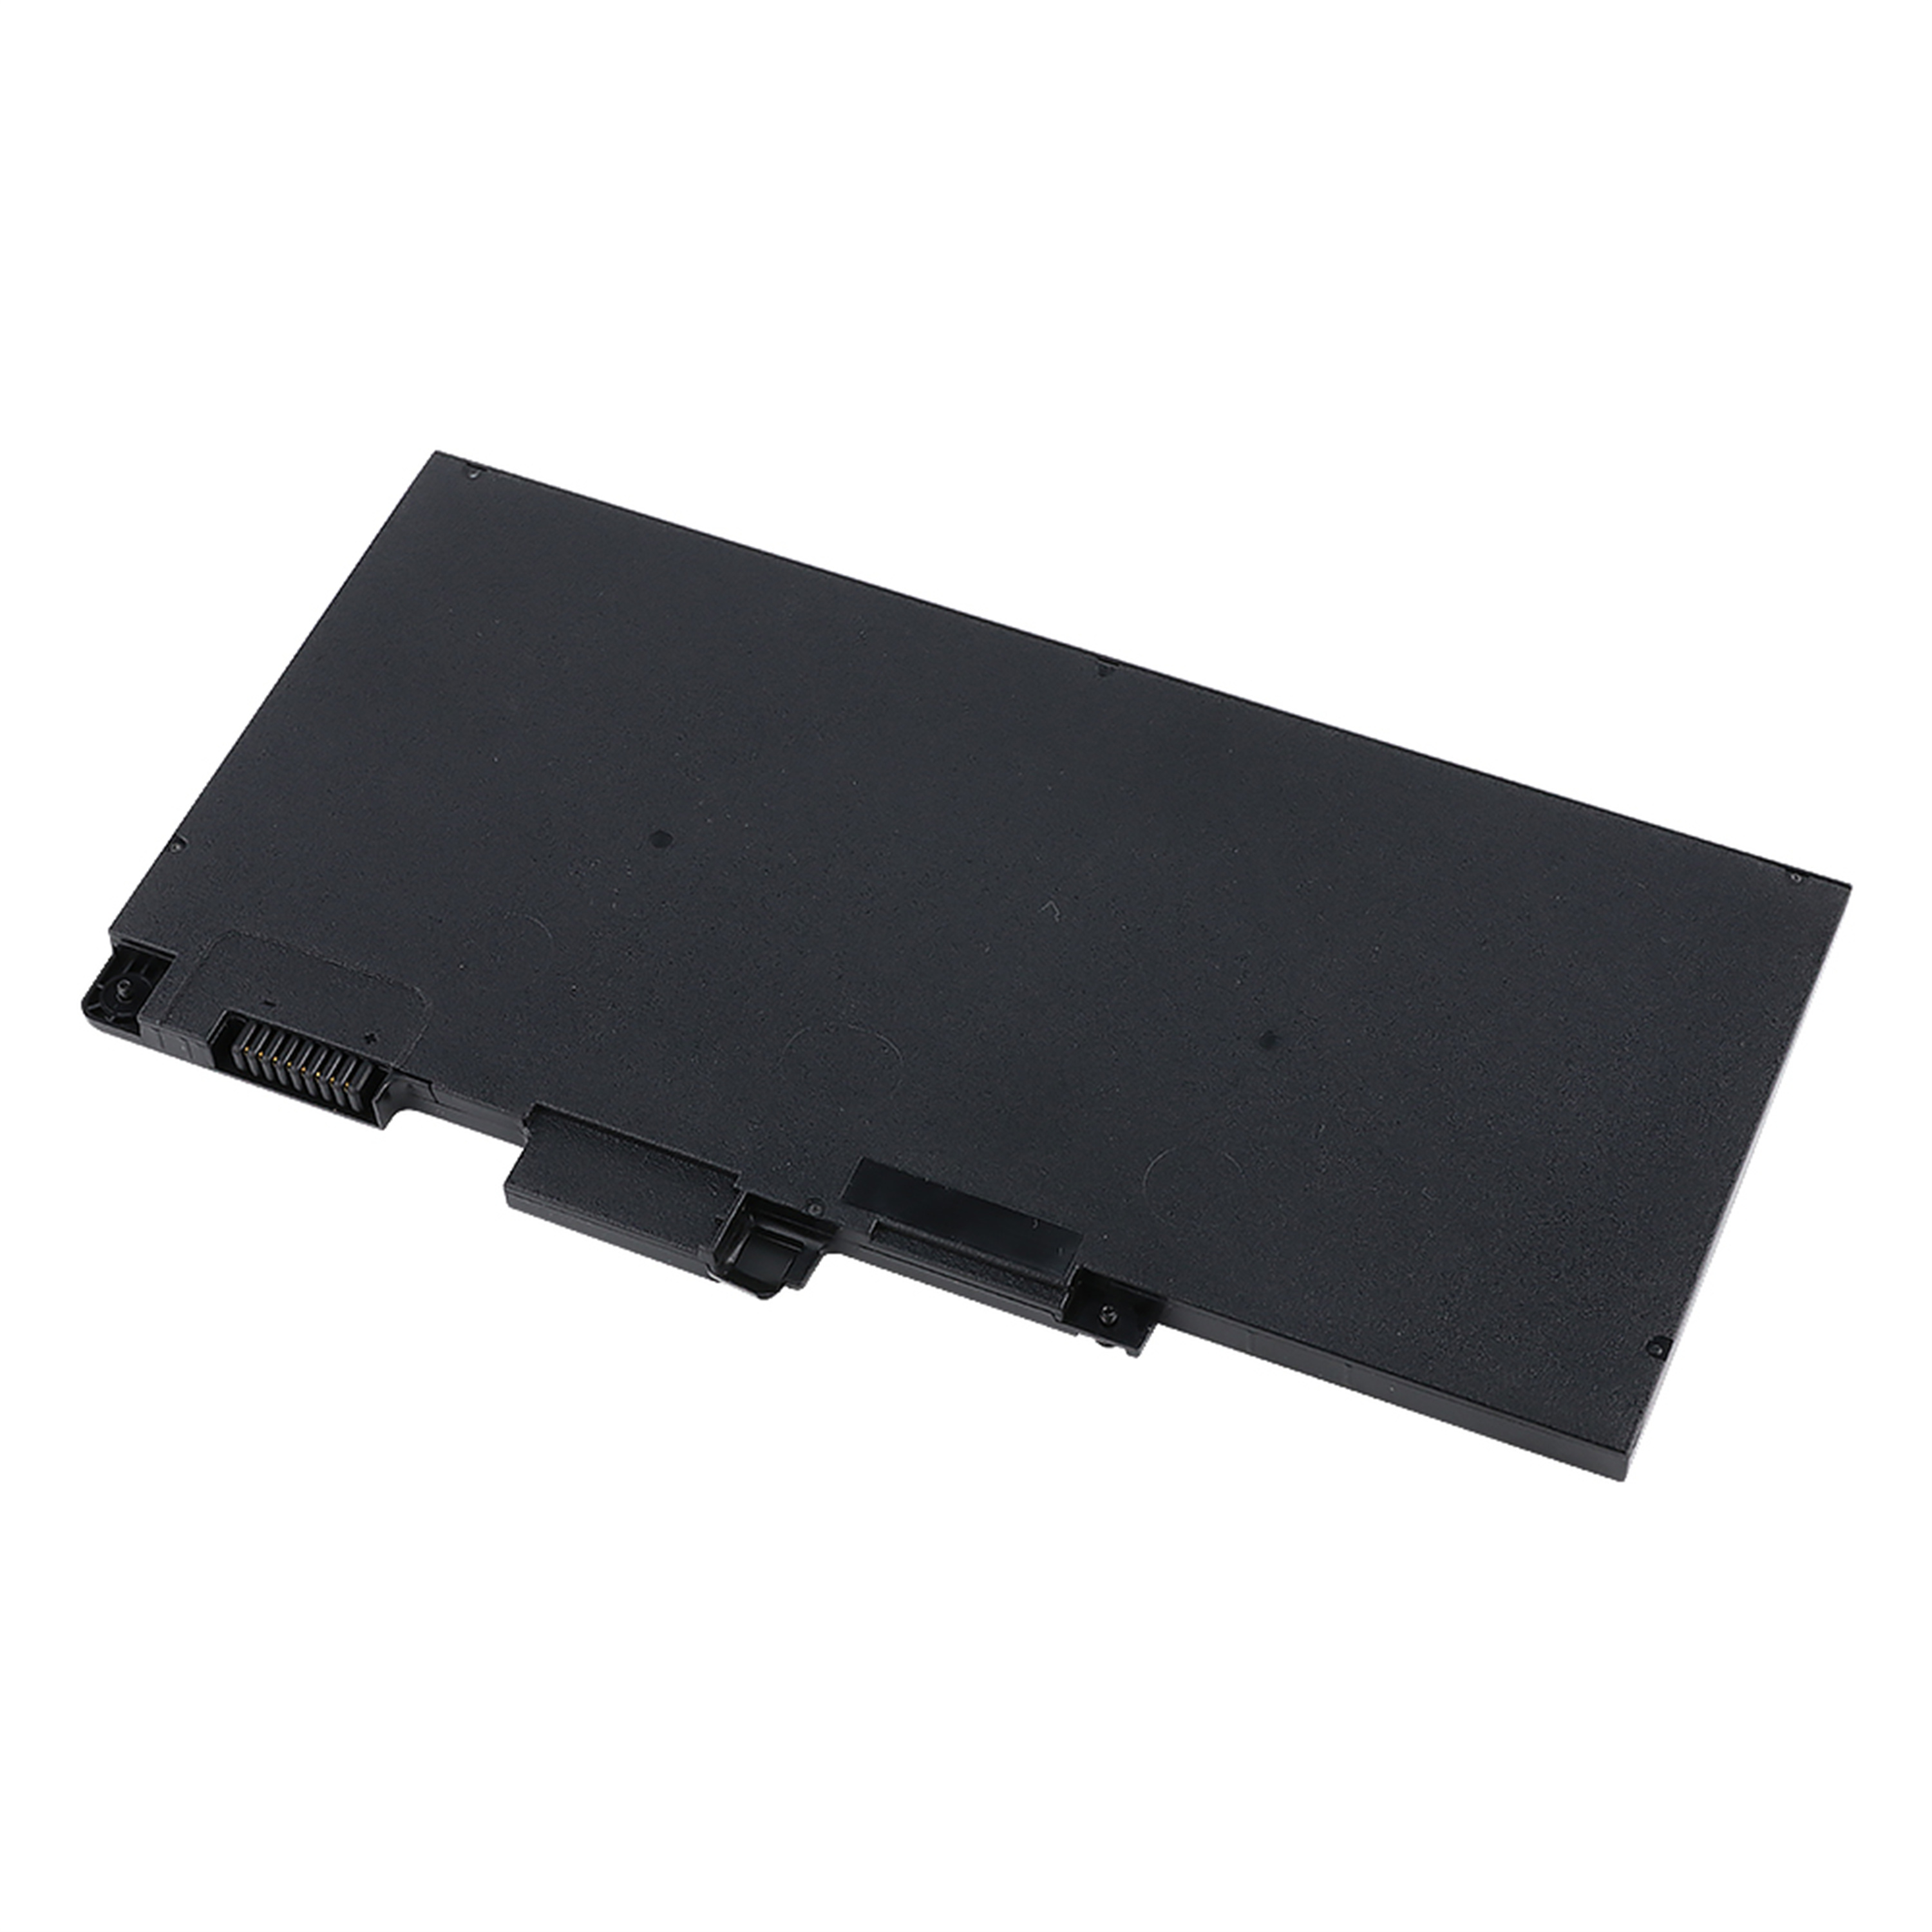 TA03XL rechargeable lithium ion Notebook battery Laptop battery For Hp EliteBook 755 G4 840 G4 848 G4 850 G4 Series,Hp ZBook 14u G4 15u G4 Series.11.5V 4300mAh